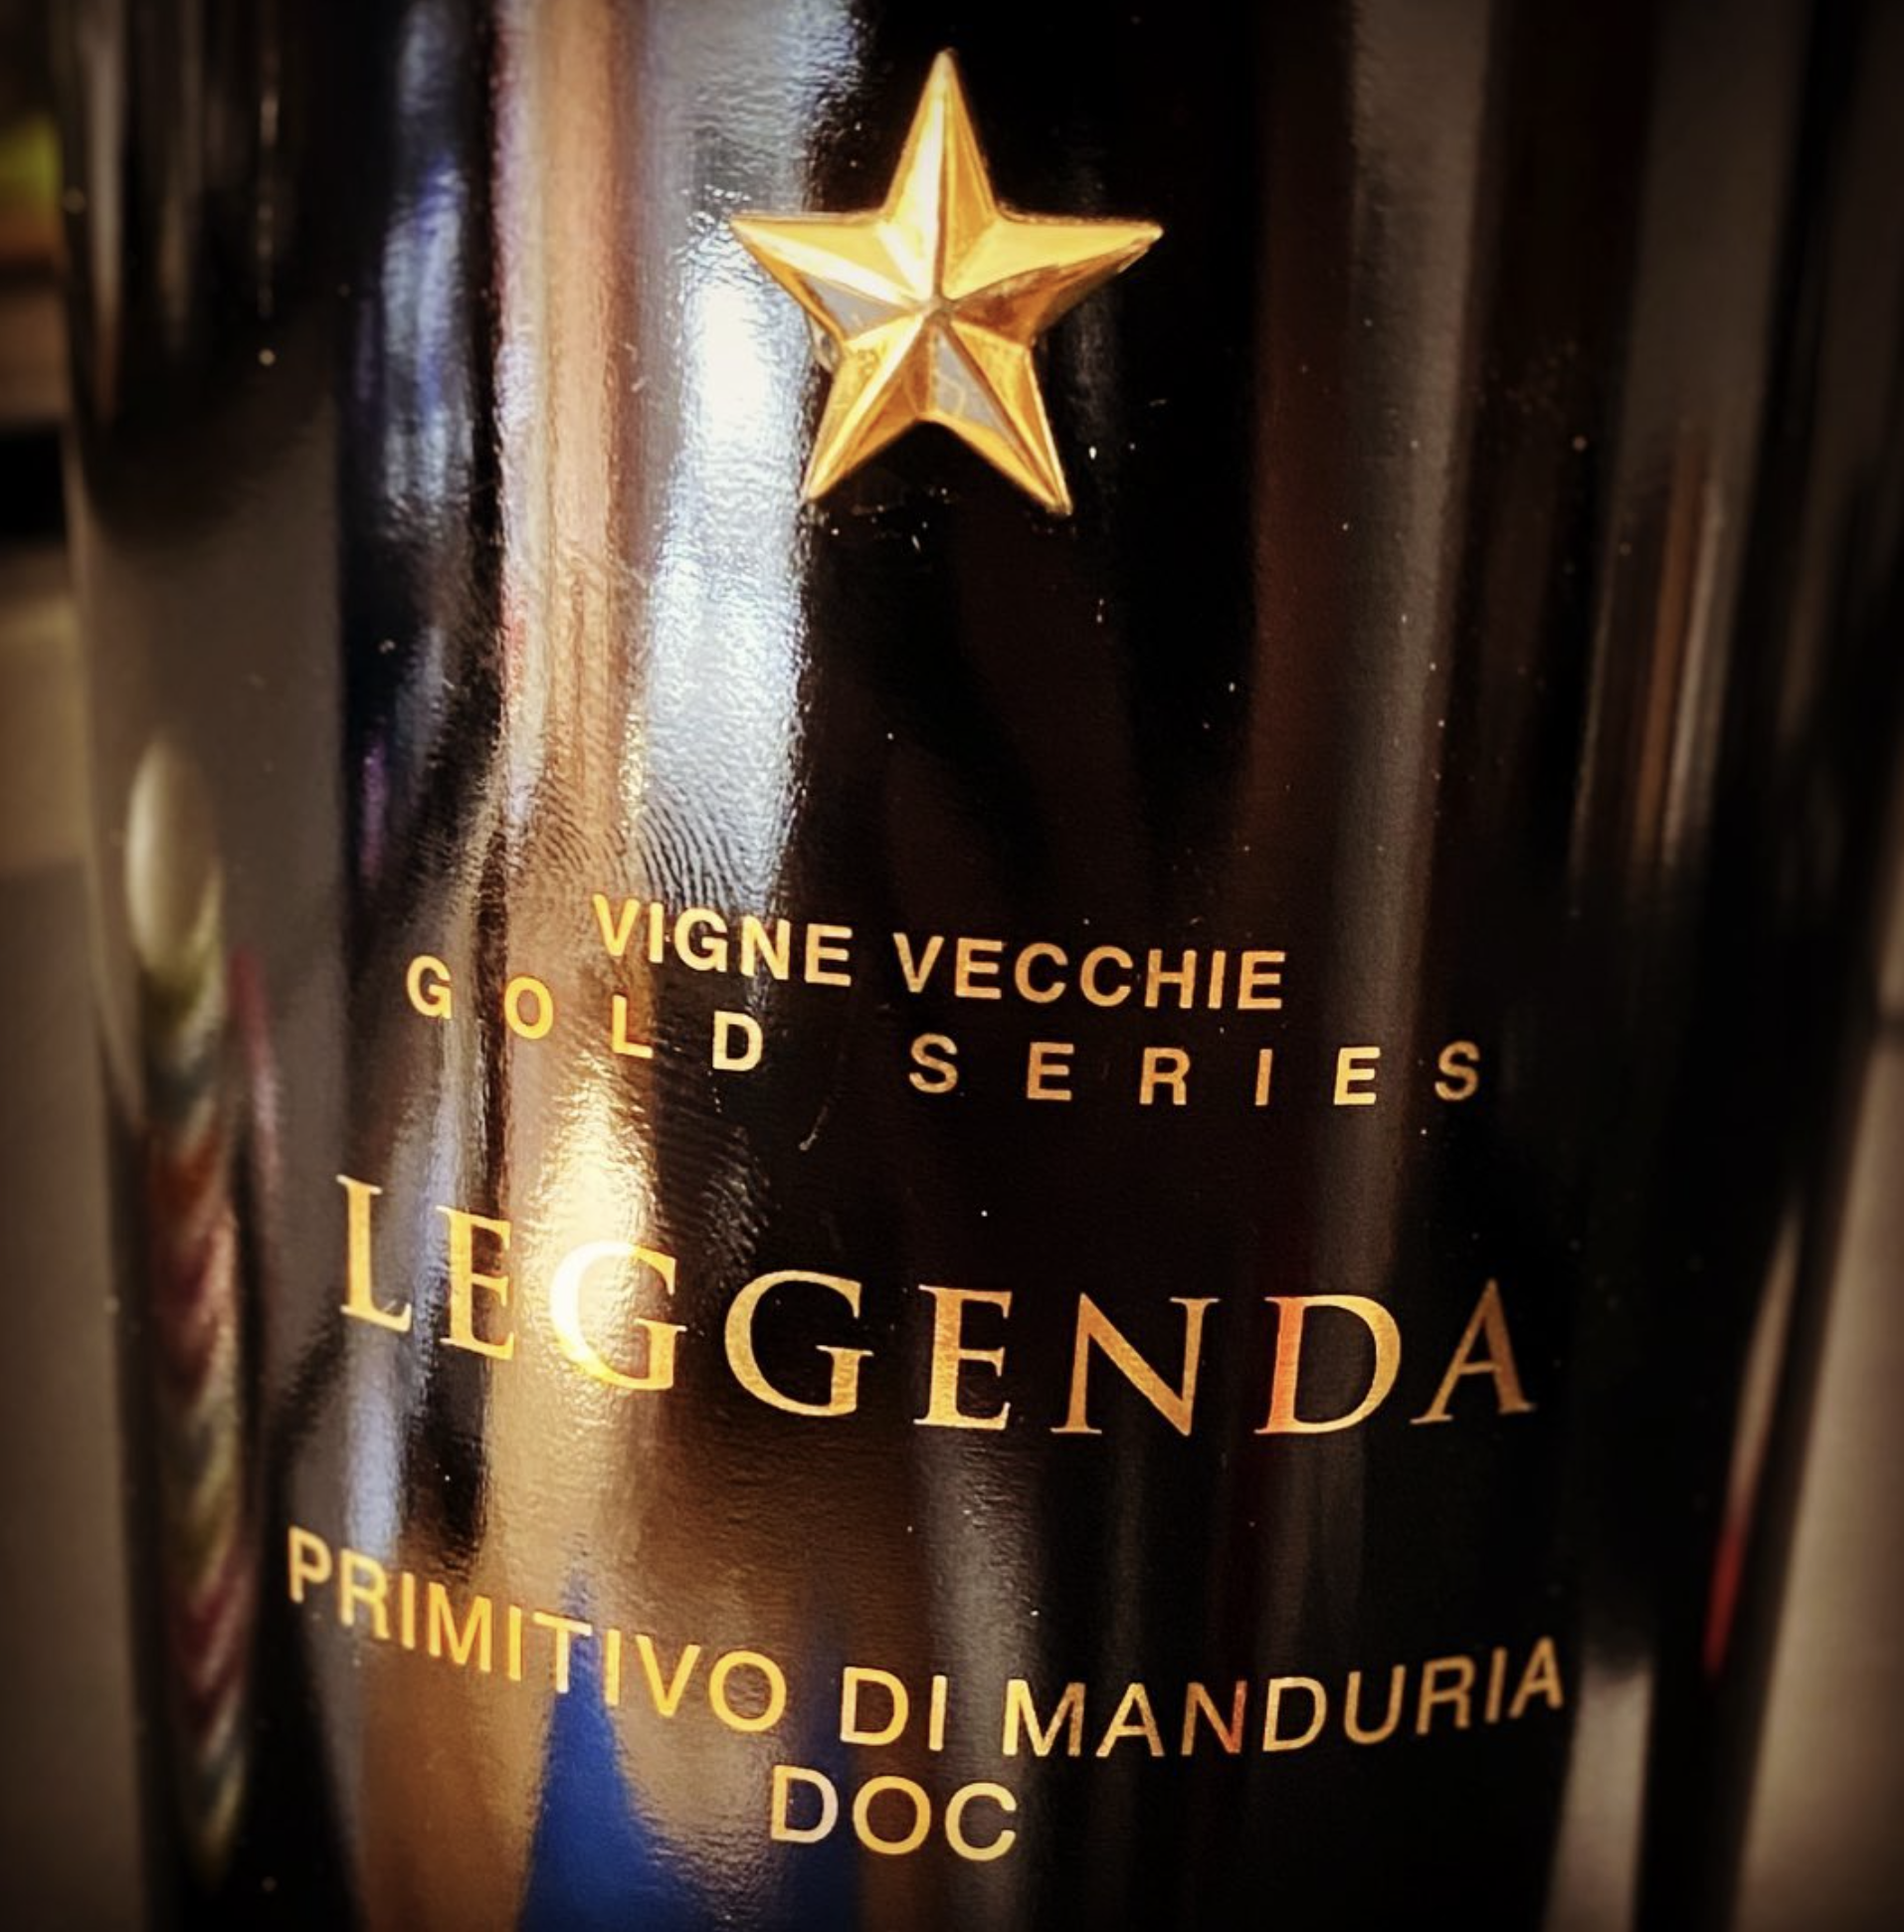 Cool bottles: Primitivo di Manduria Leggenda